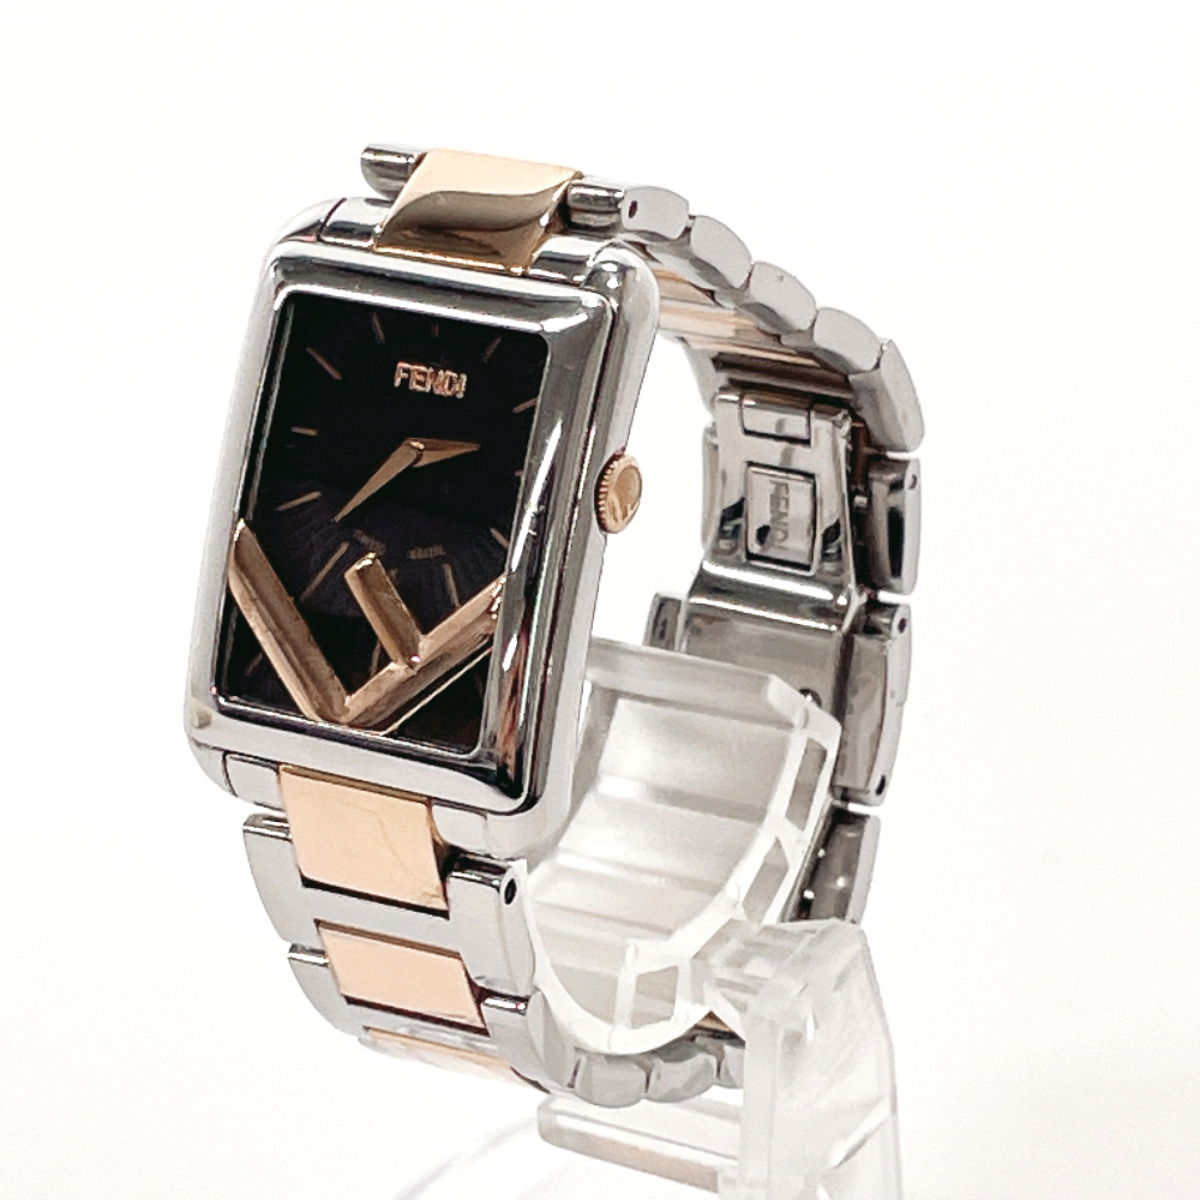  Fendi FENDI наручные часы FOW906A2YLF0QA1efiz Fendi нержавеющая сталь серебряный кварц 